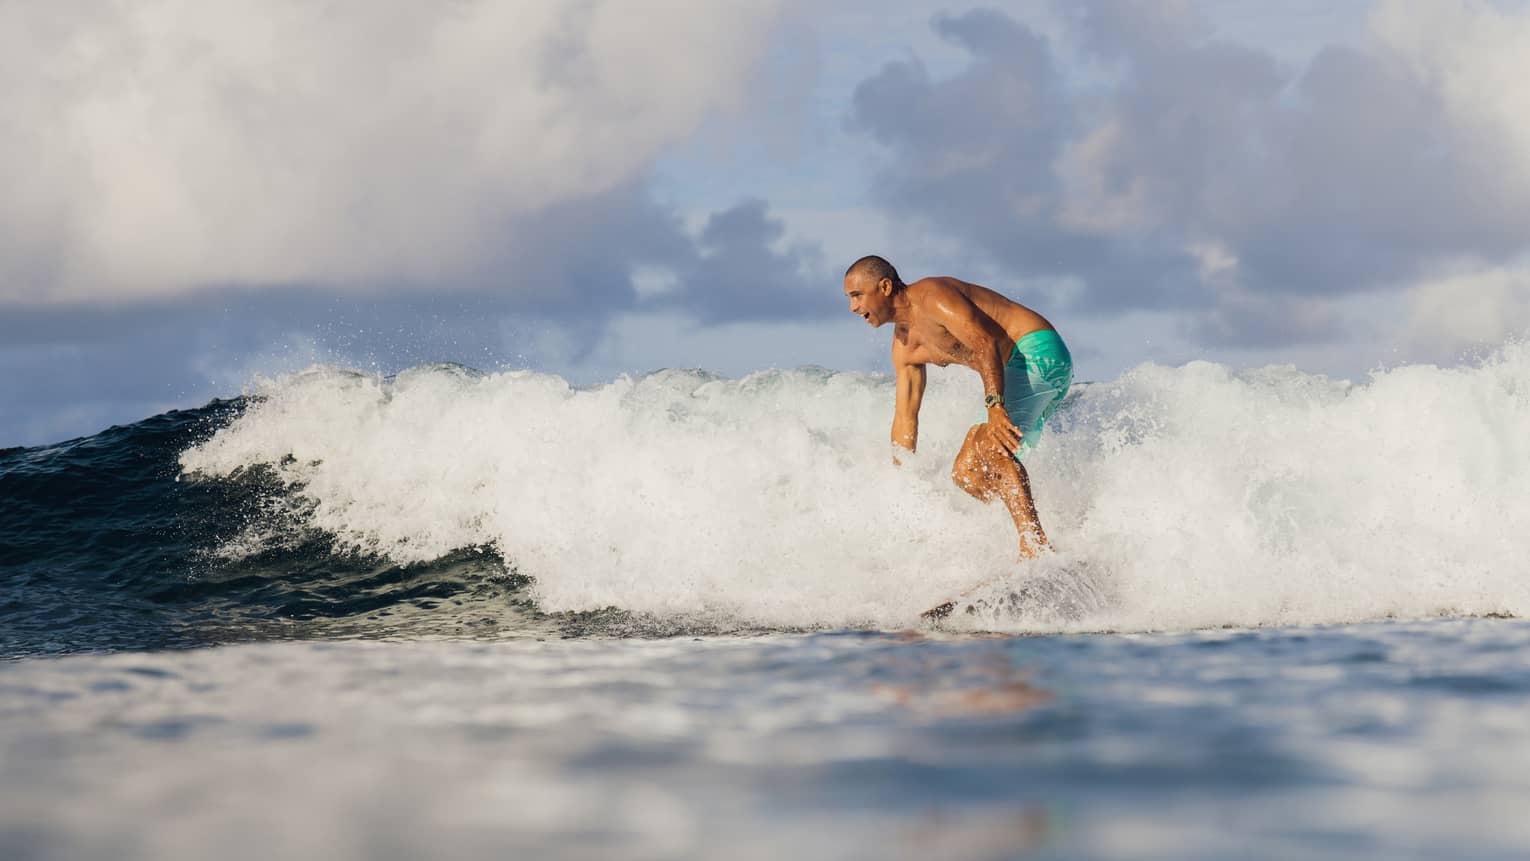 Surfboard designer Bonga Perkins in teal board shorts crests a wave